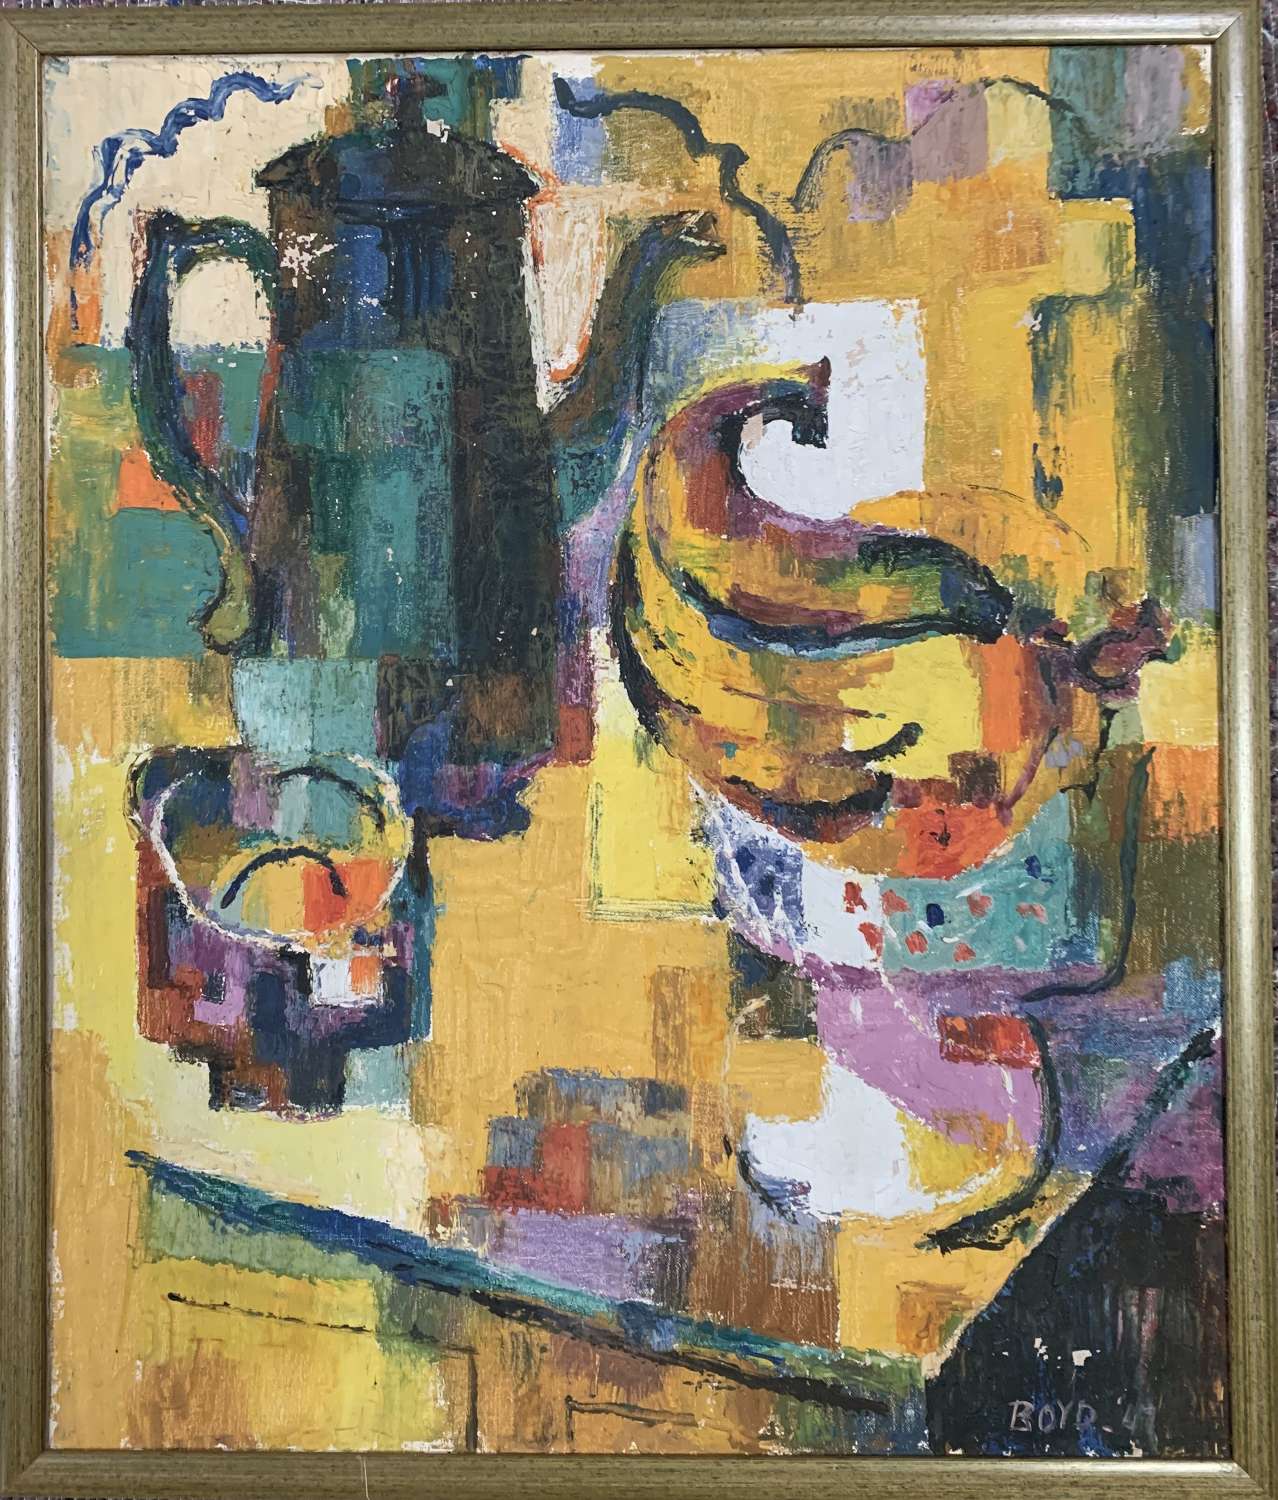 Margaret Boyd, Cubist Still Life, Oil on Canvas